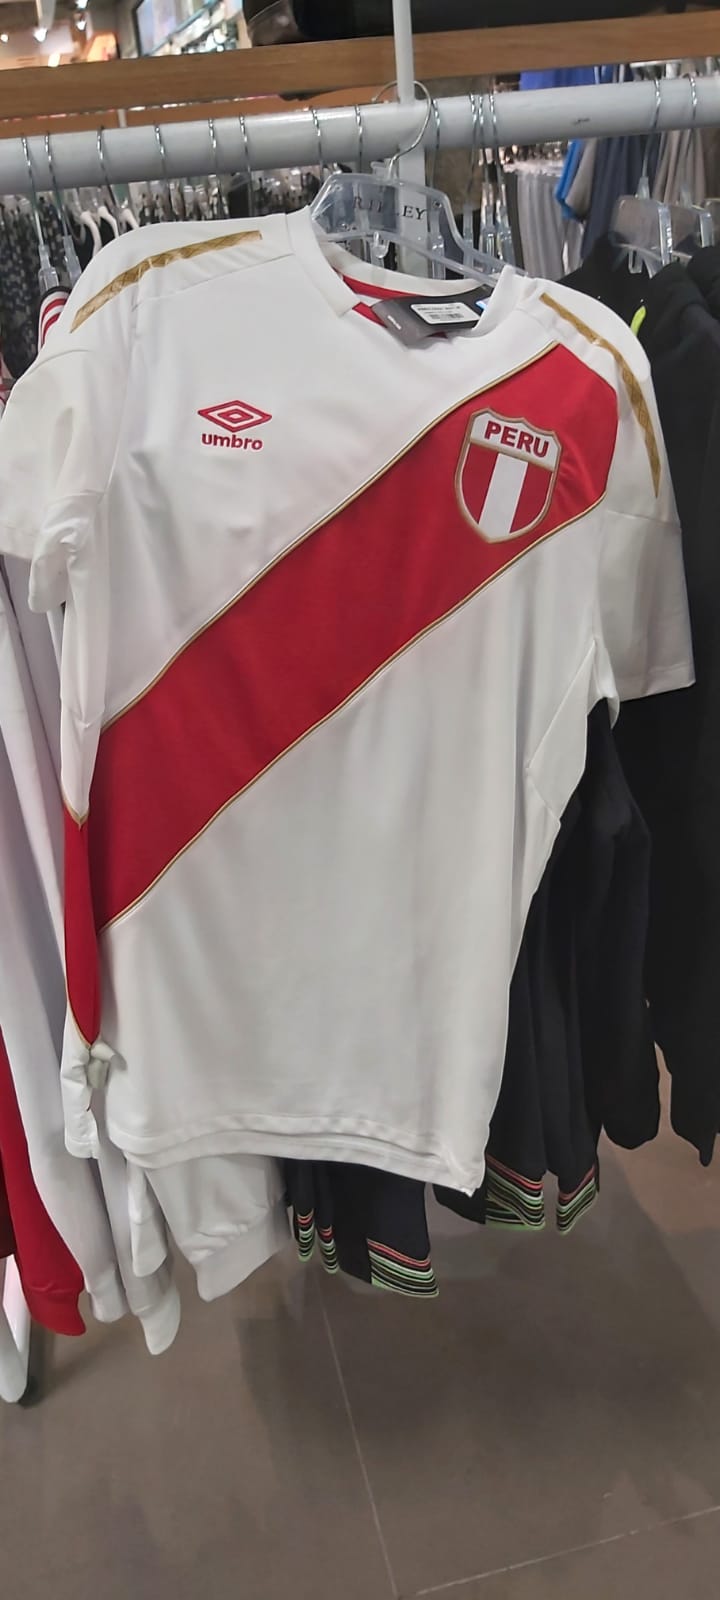 Umbro volvió a lazar un modelo de camiseta de la Selección Peruana ante gran